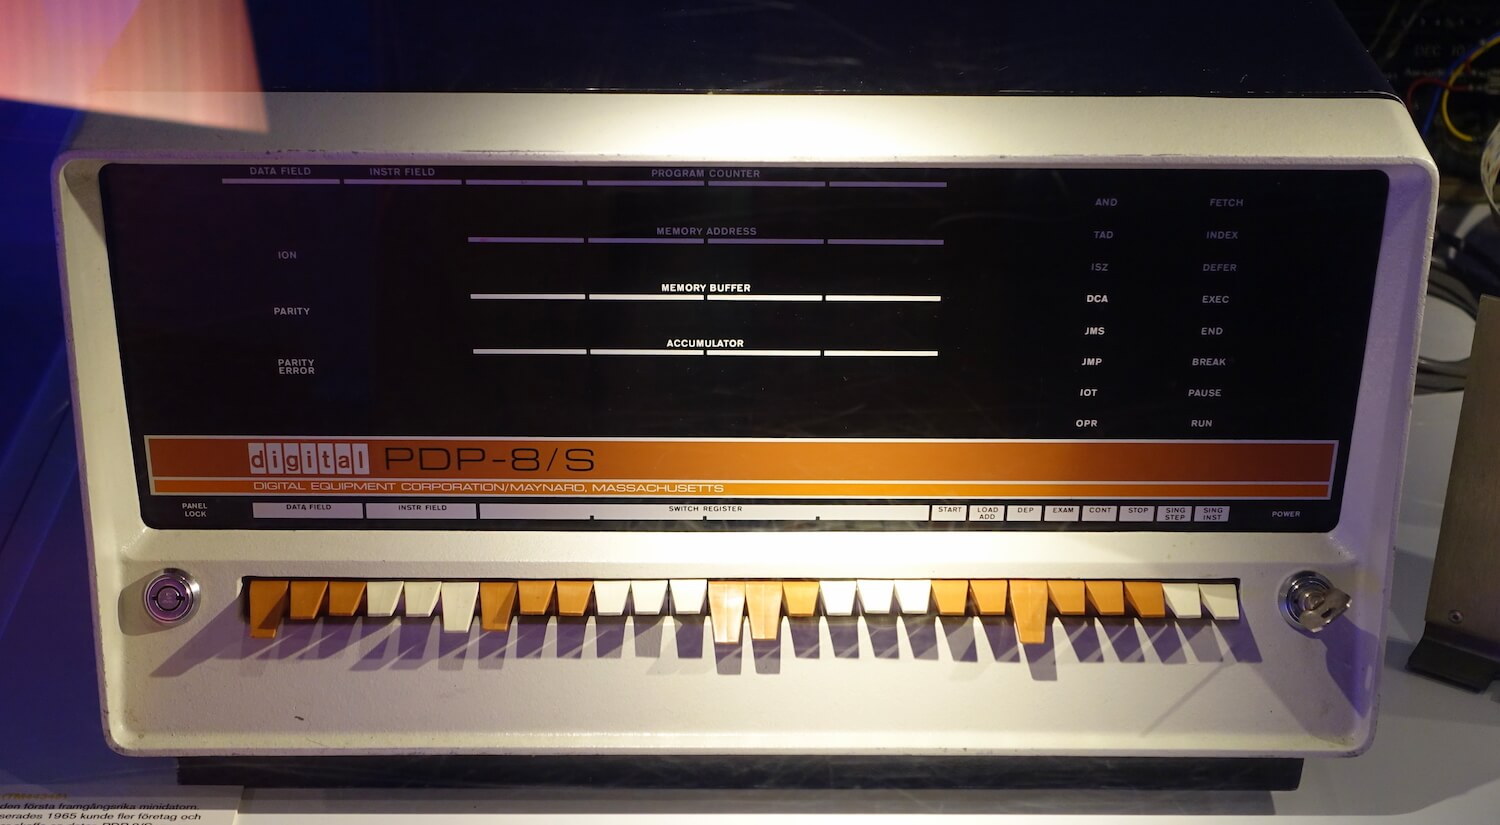 The DEC PDP-8